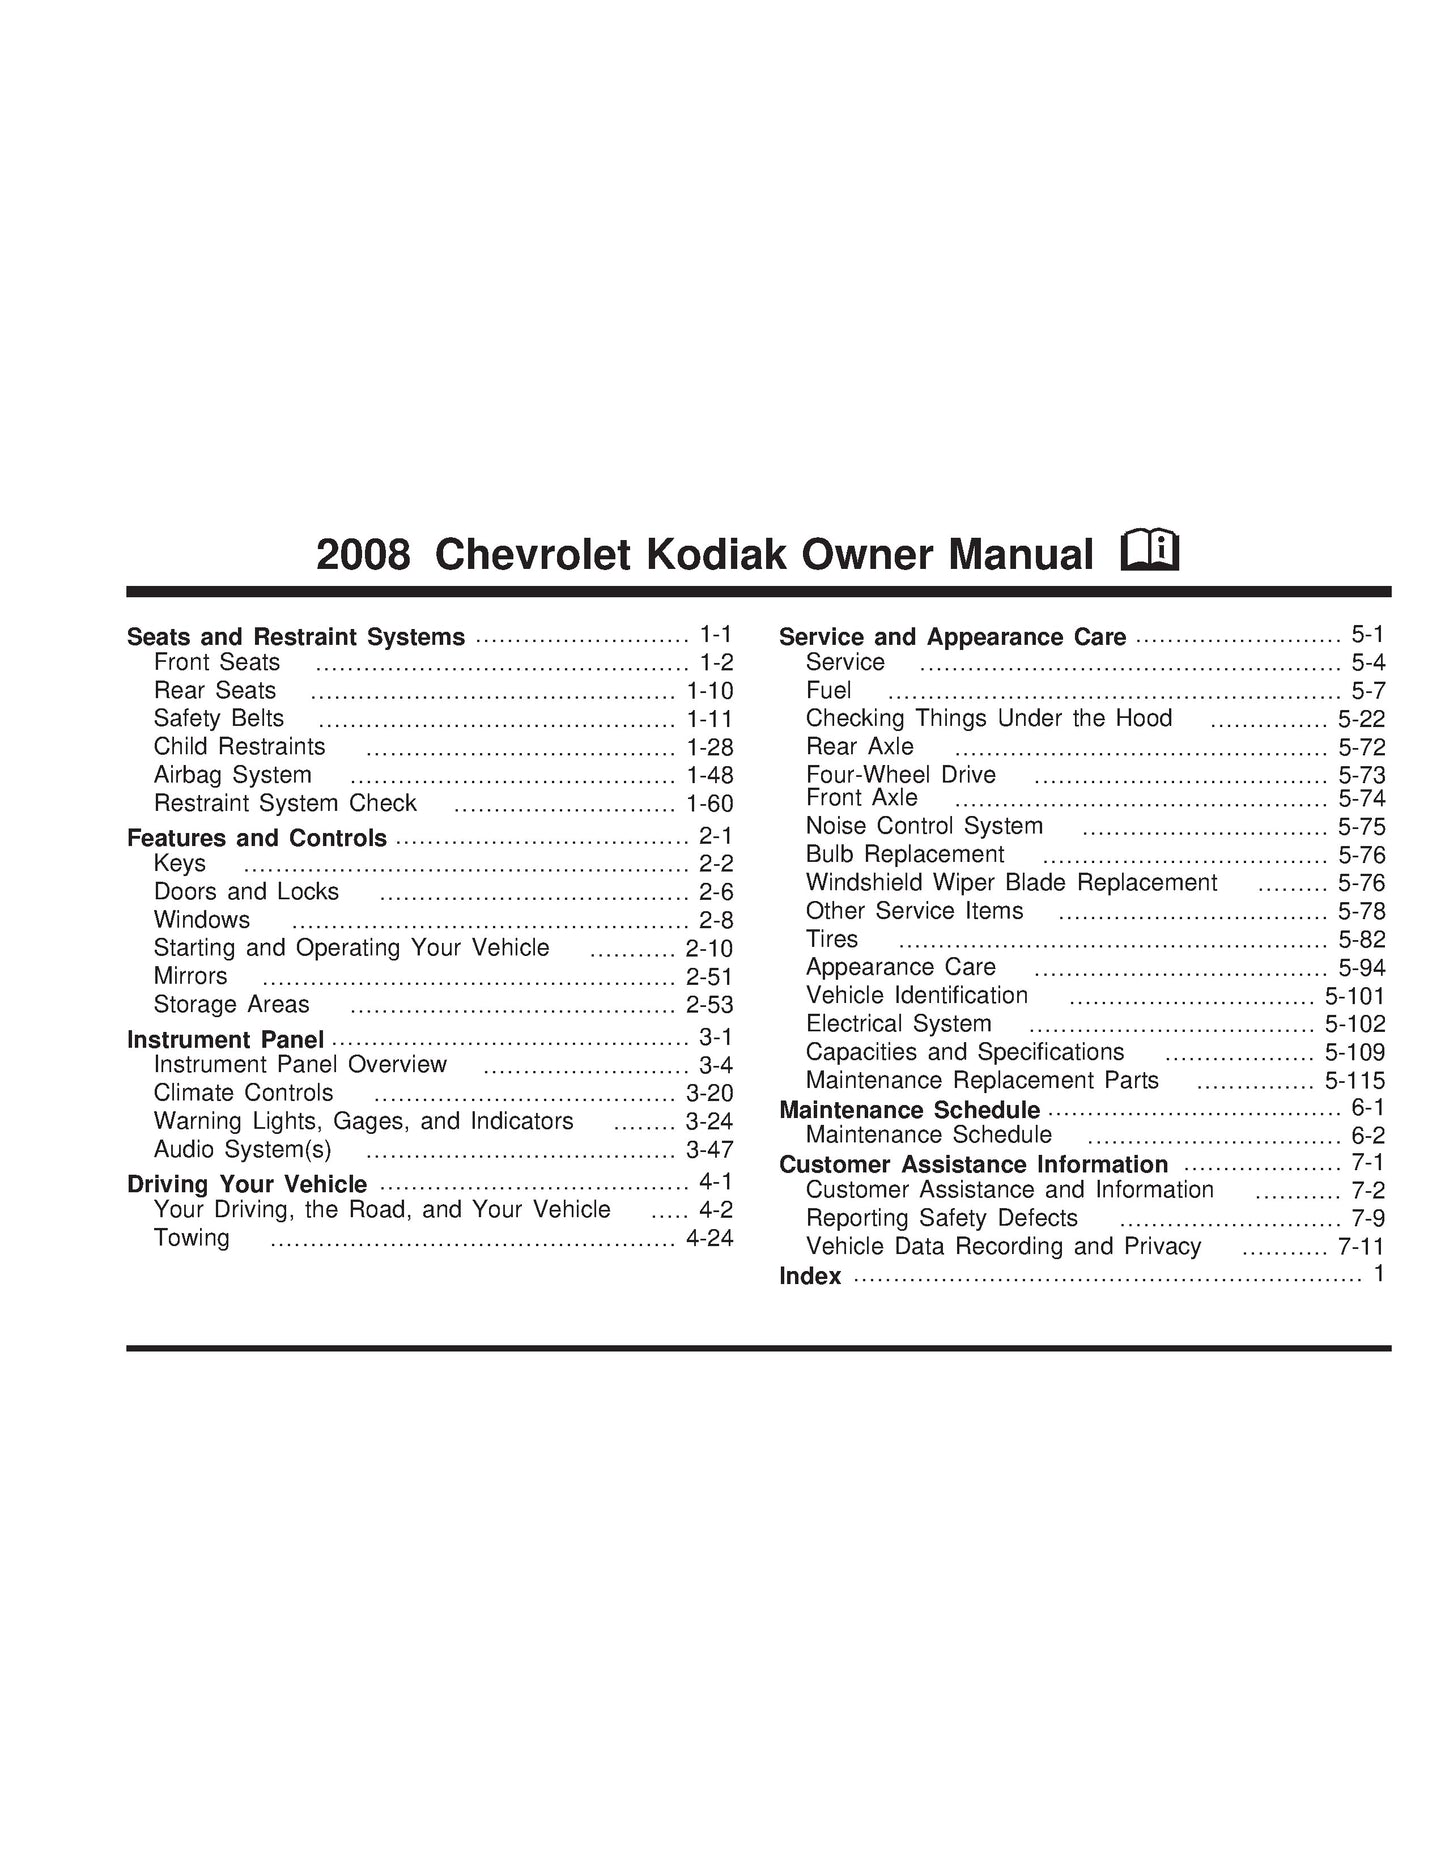 2008 Chevrolet Kodiak Owner's Manual | English